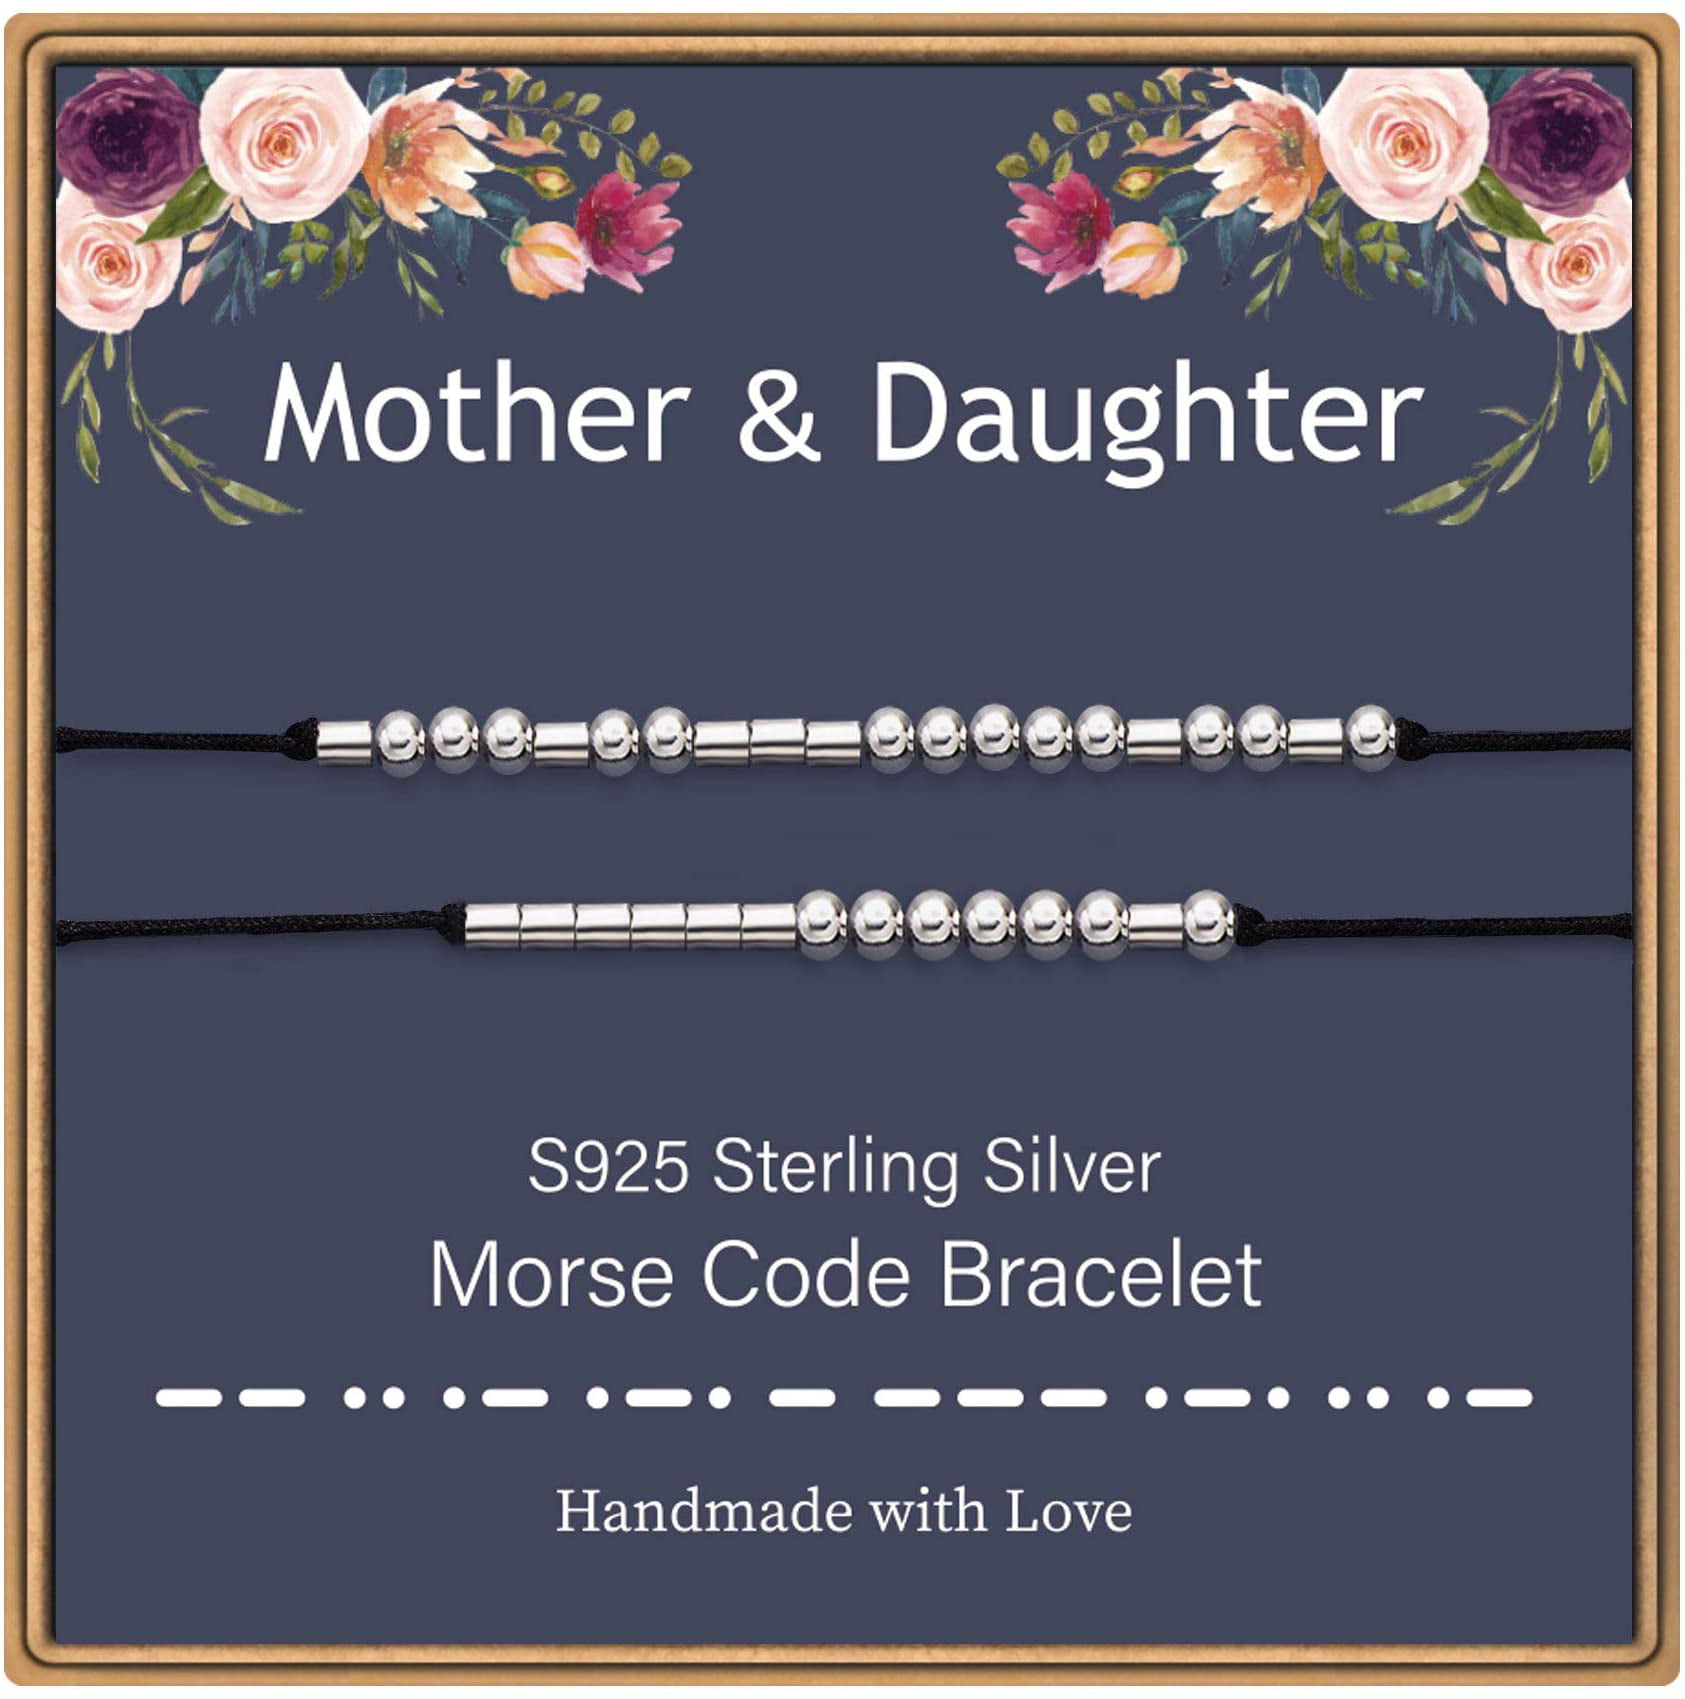 Morse Code Bracelet 925 Sterling Silver Beads on Silk Cord Secret Message music bracelet Gift Jewelry for her 